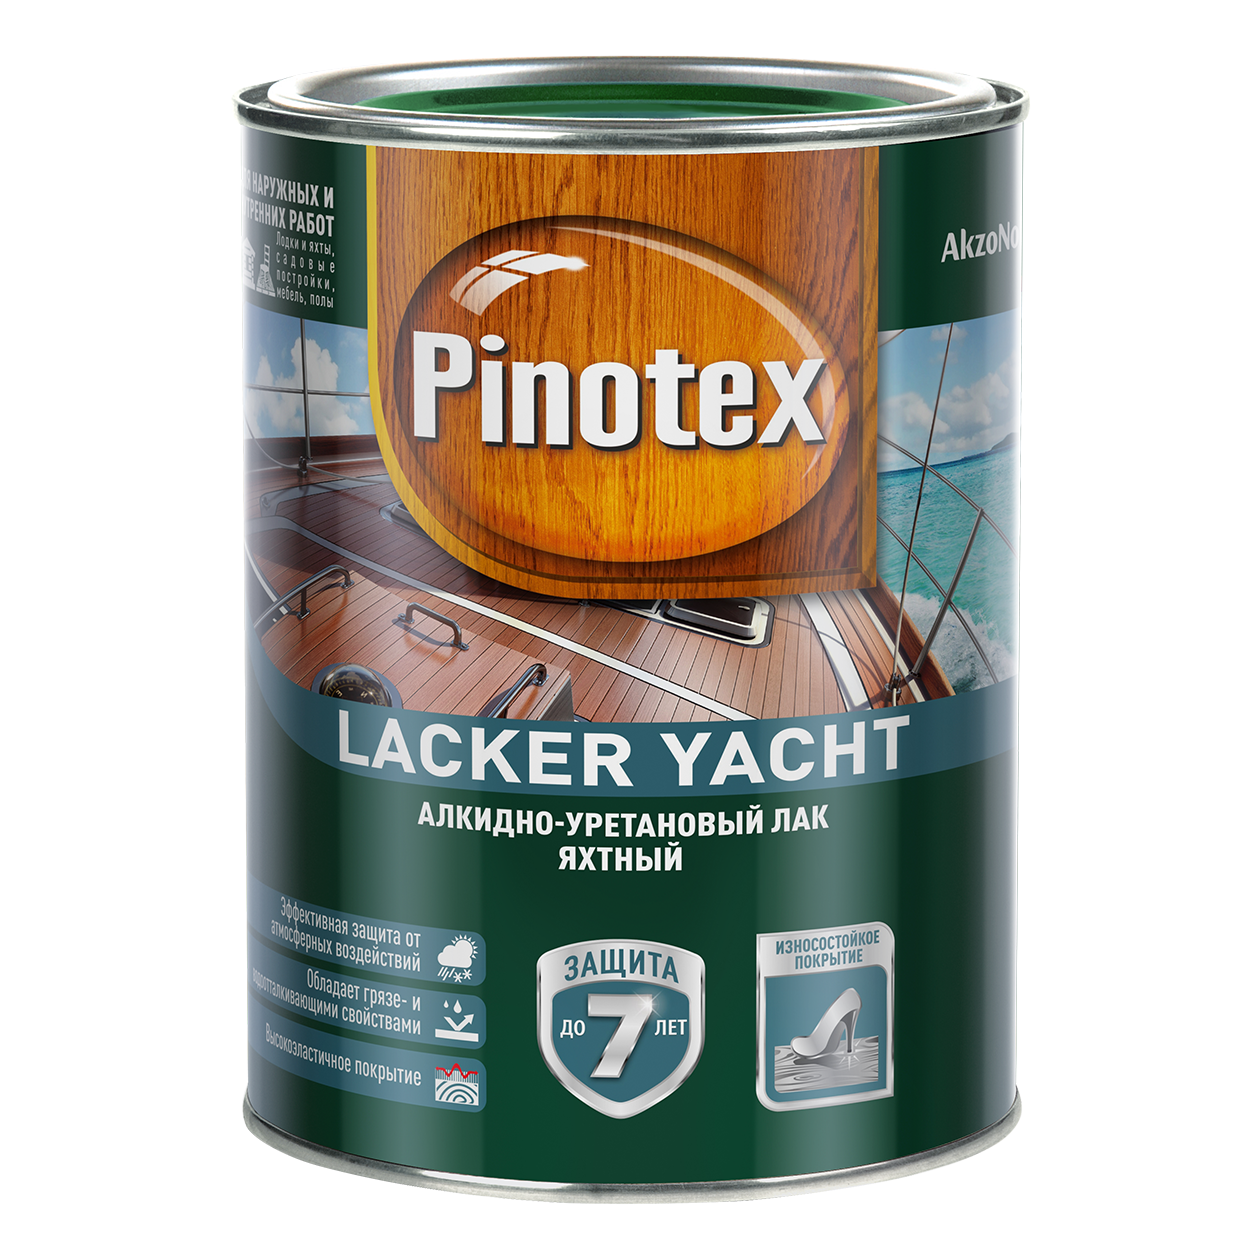 Яхтный лак Pinotex Lacker Yacht 40 (2,7л) полумат.